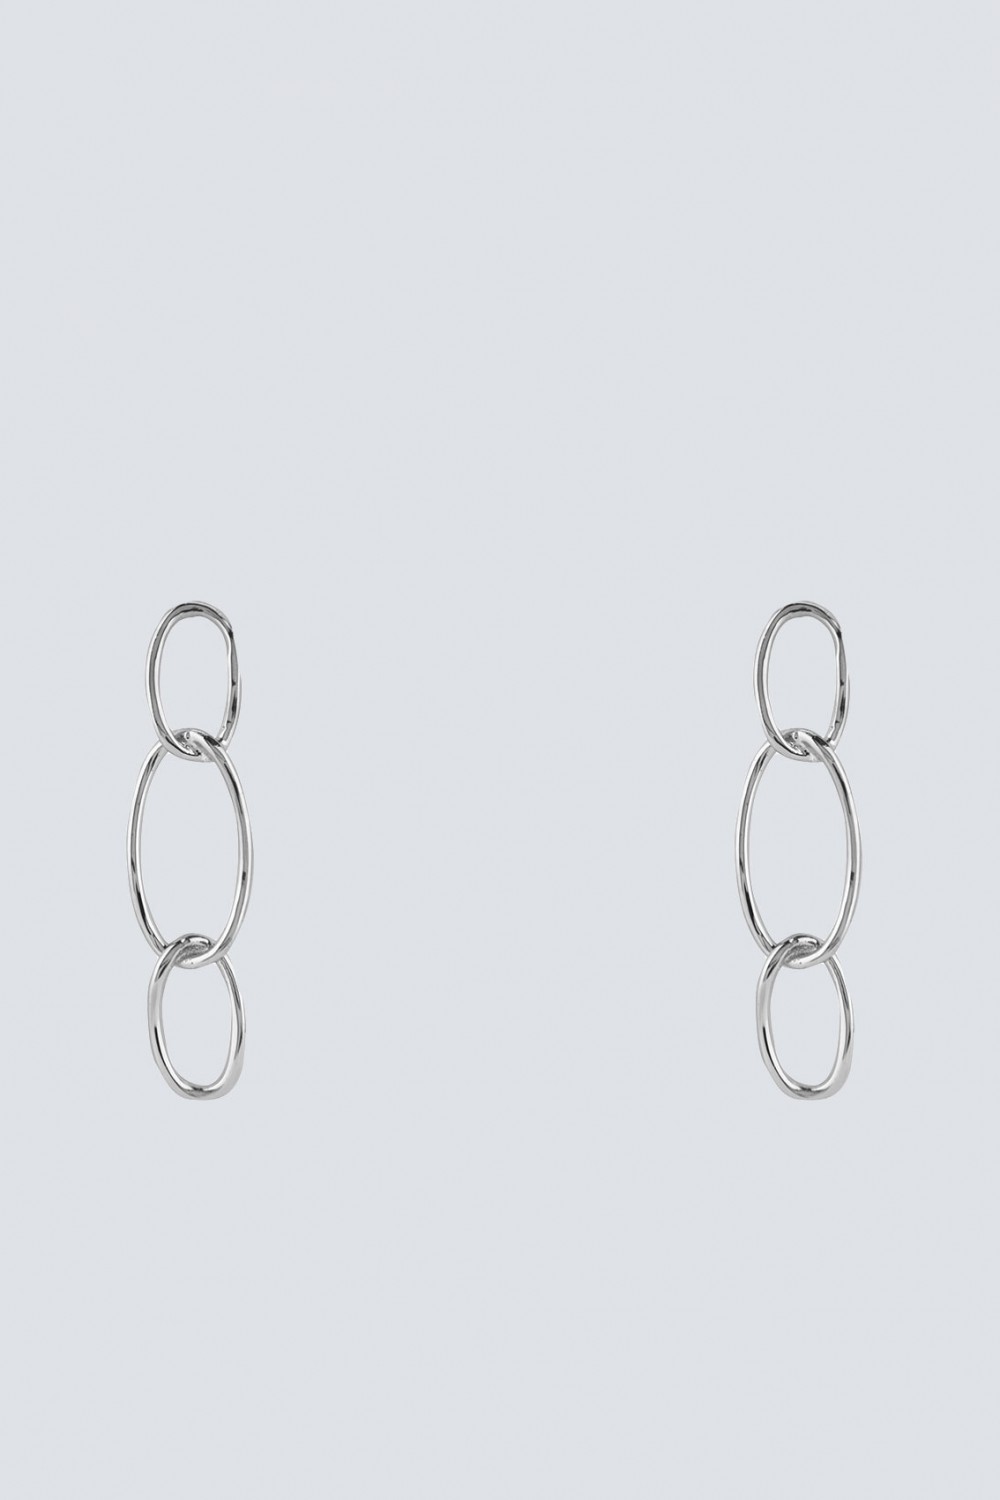 Silver earrings with oval pendants